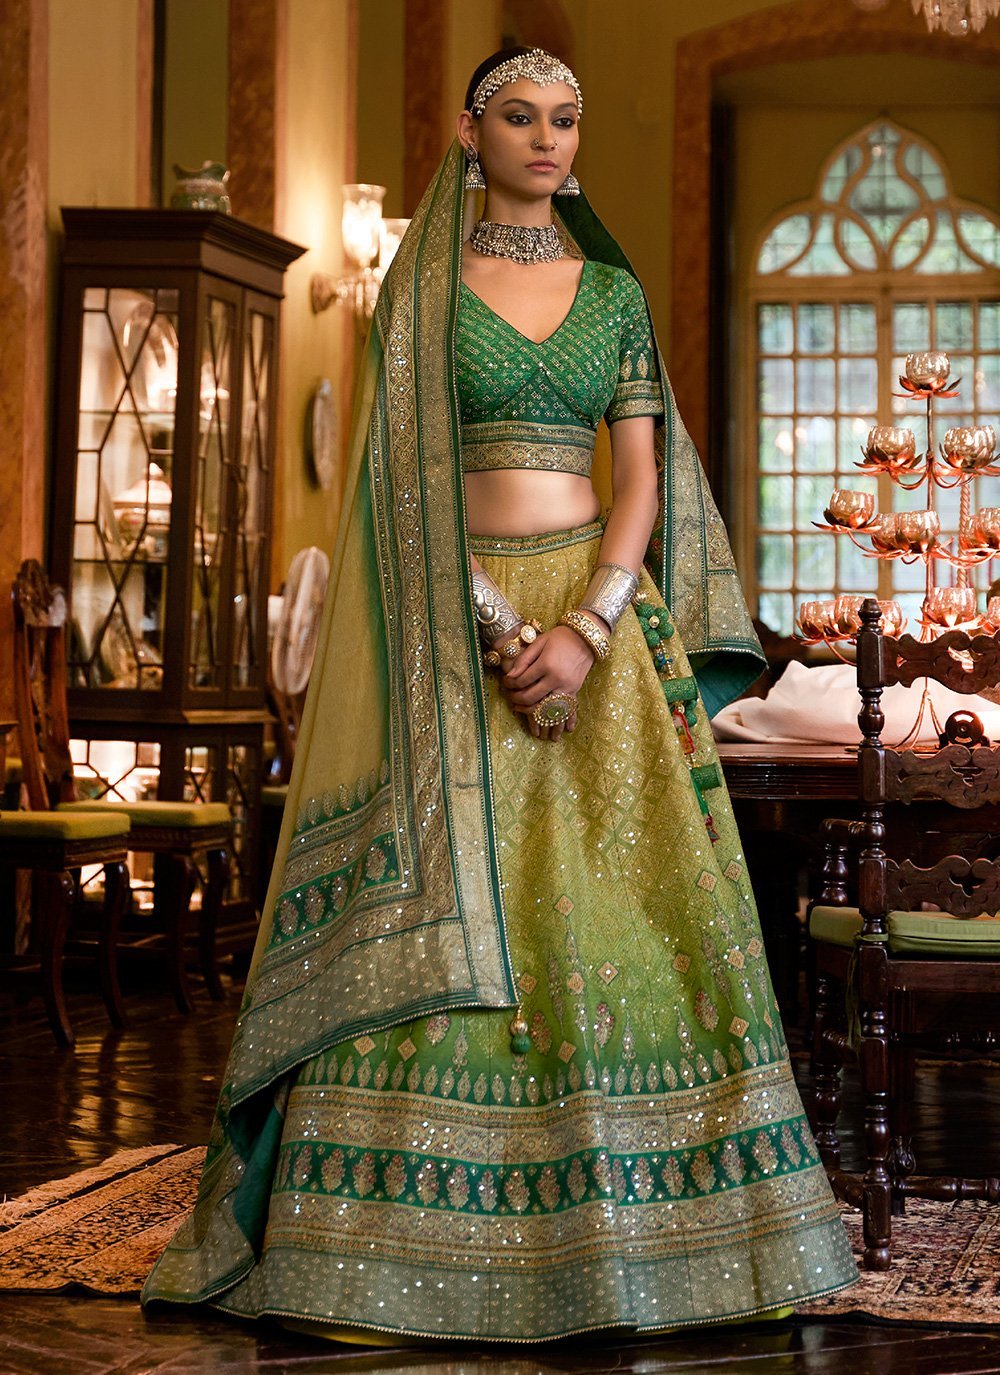 Green Silk Mirror Readymade Ghagra Choli save upto 50%! : 89132 - Lehenga